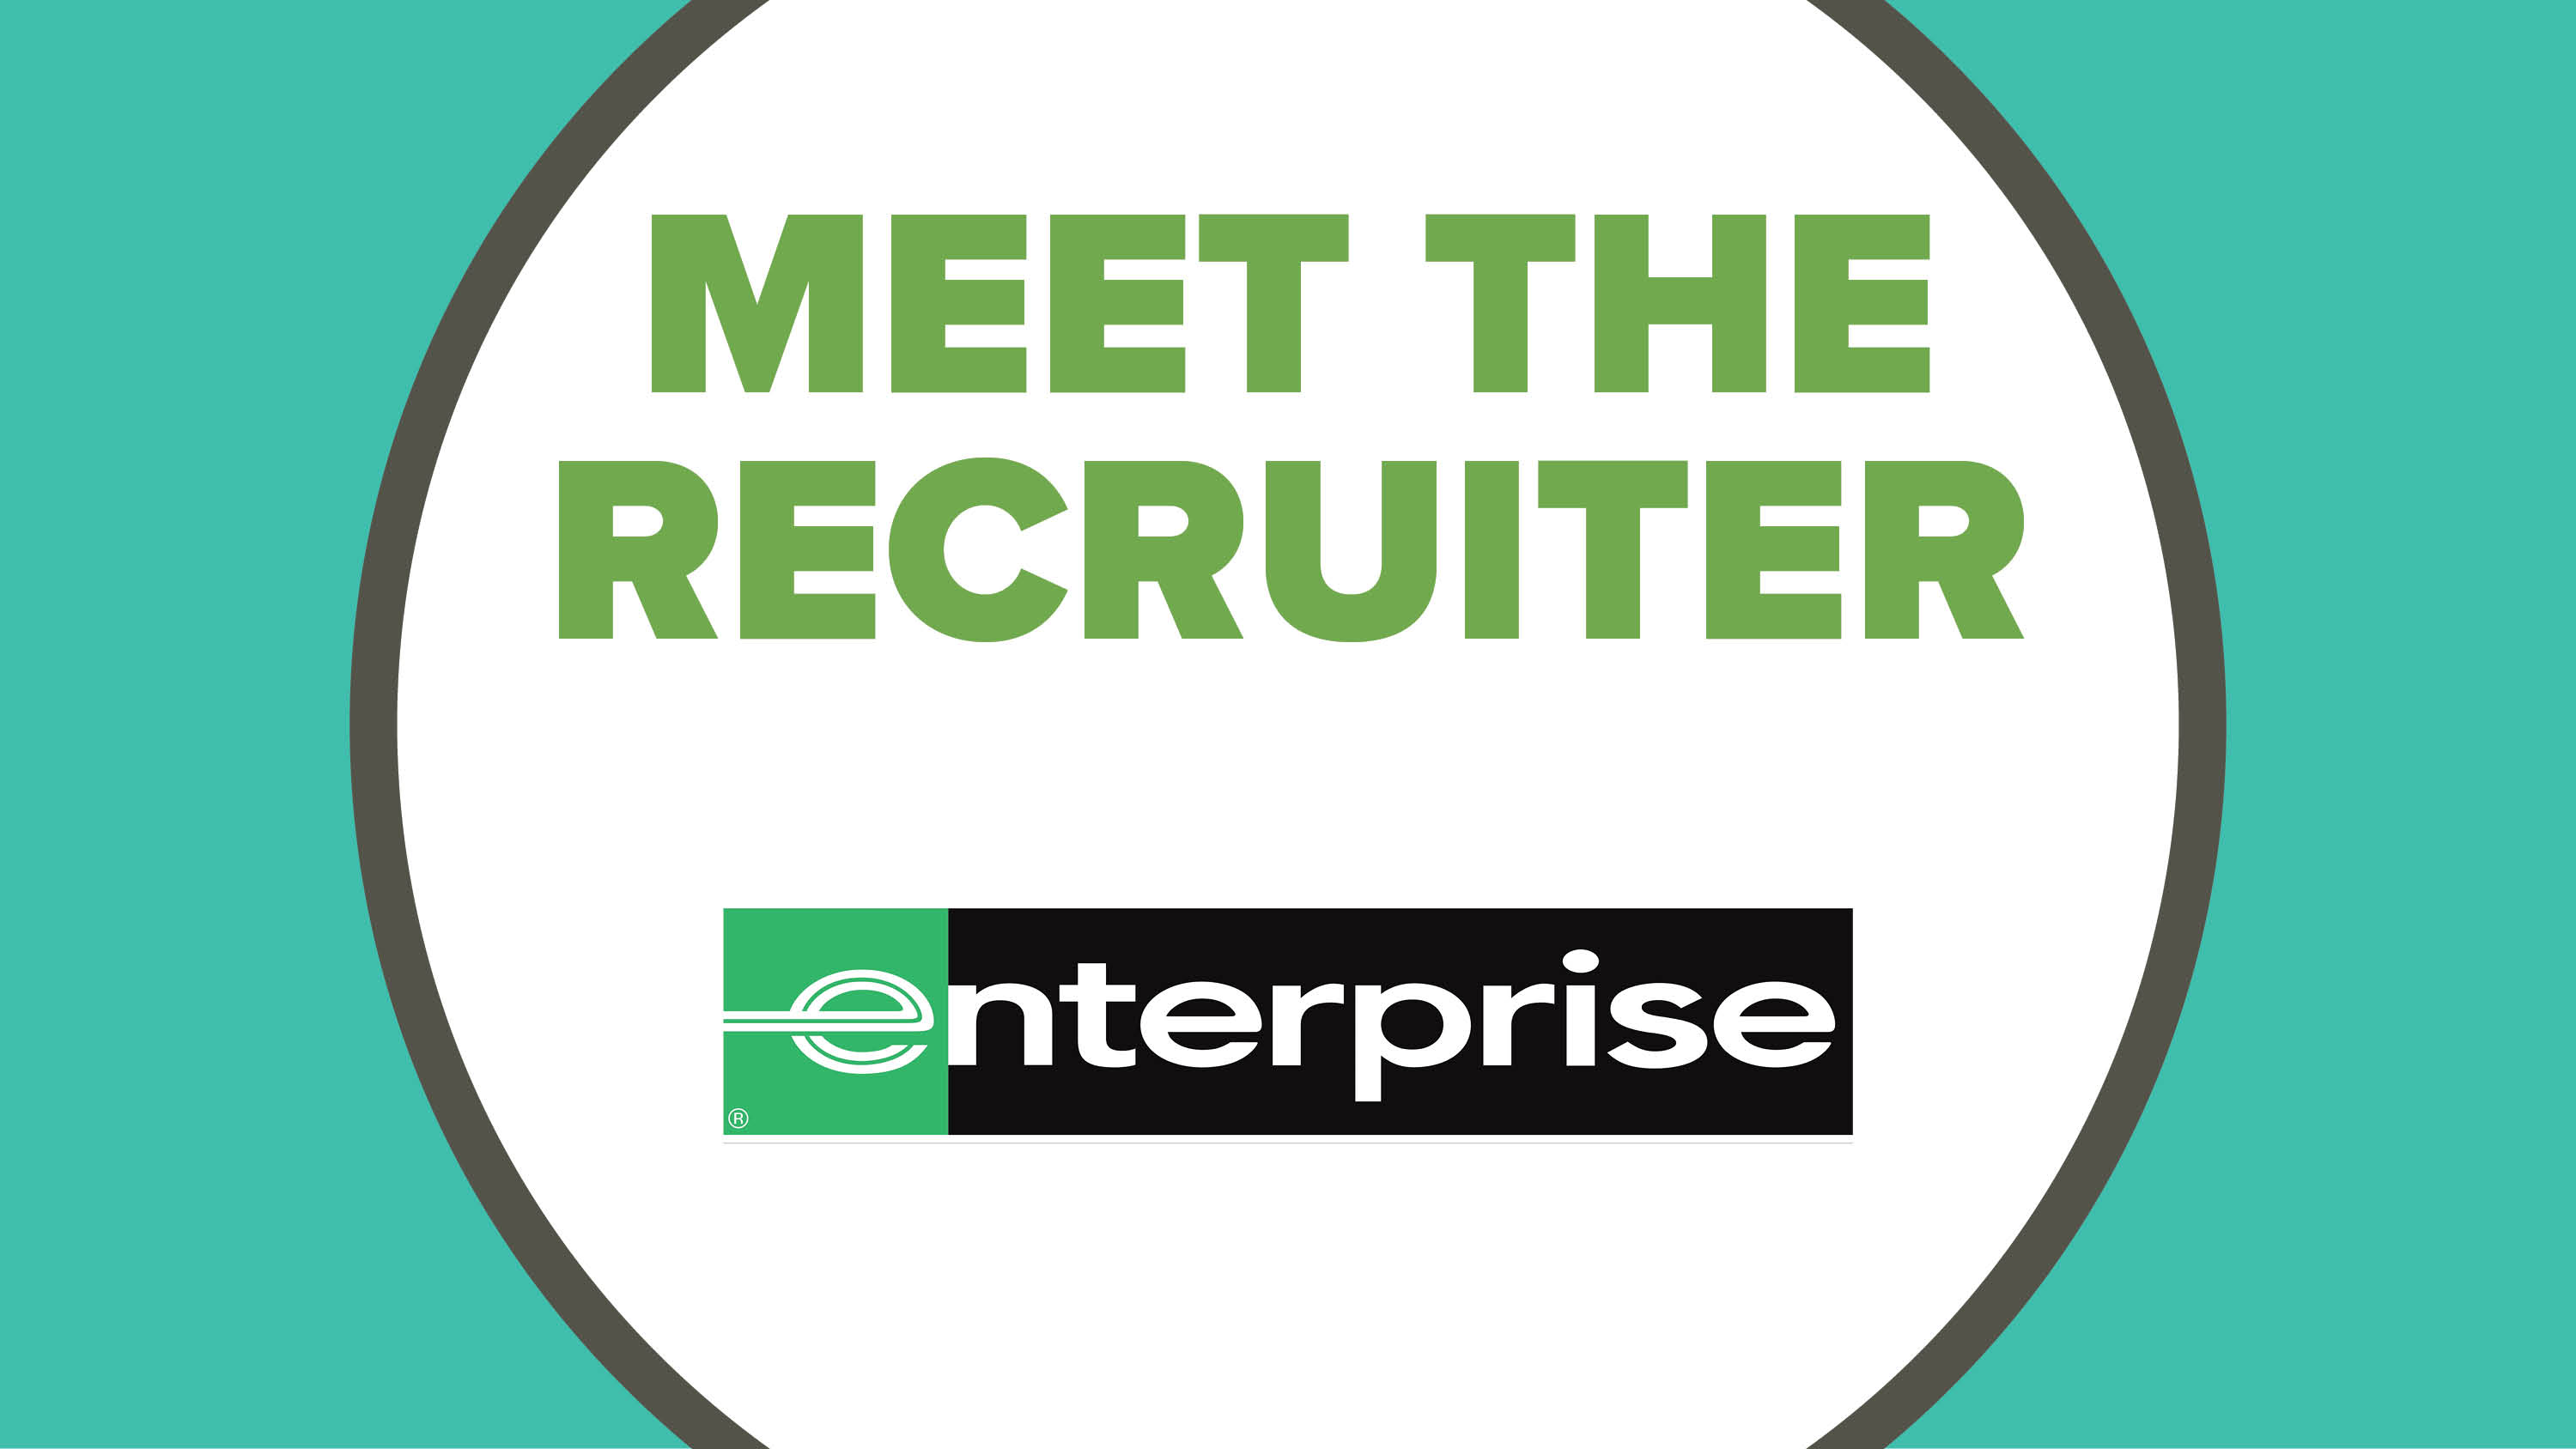 Meet-the-Recruiter-thumb-Enterprise_292795